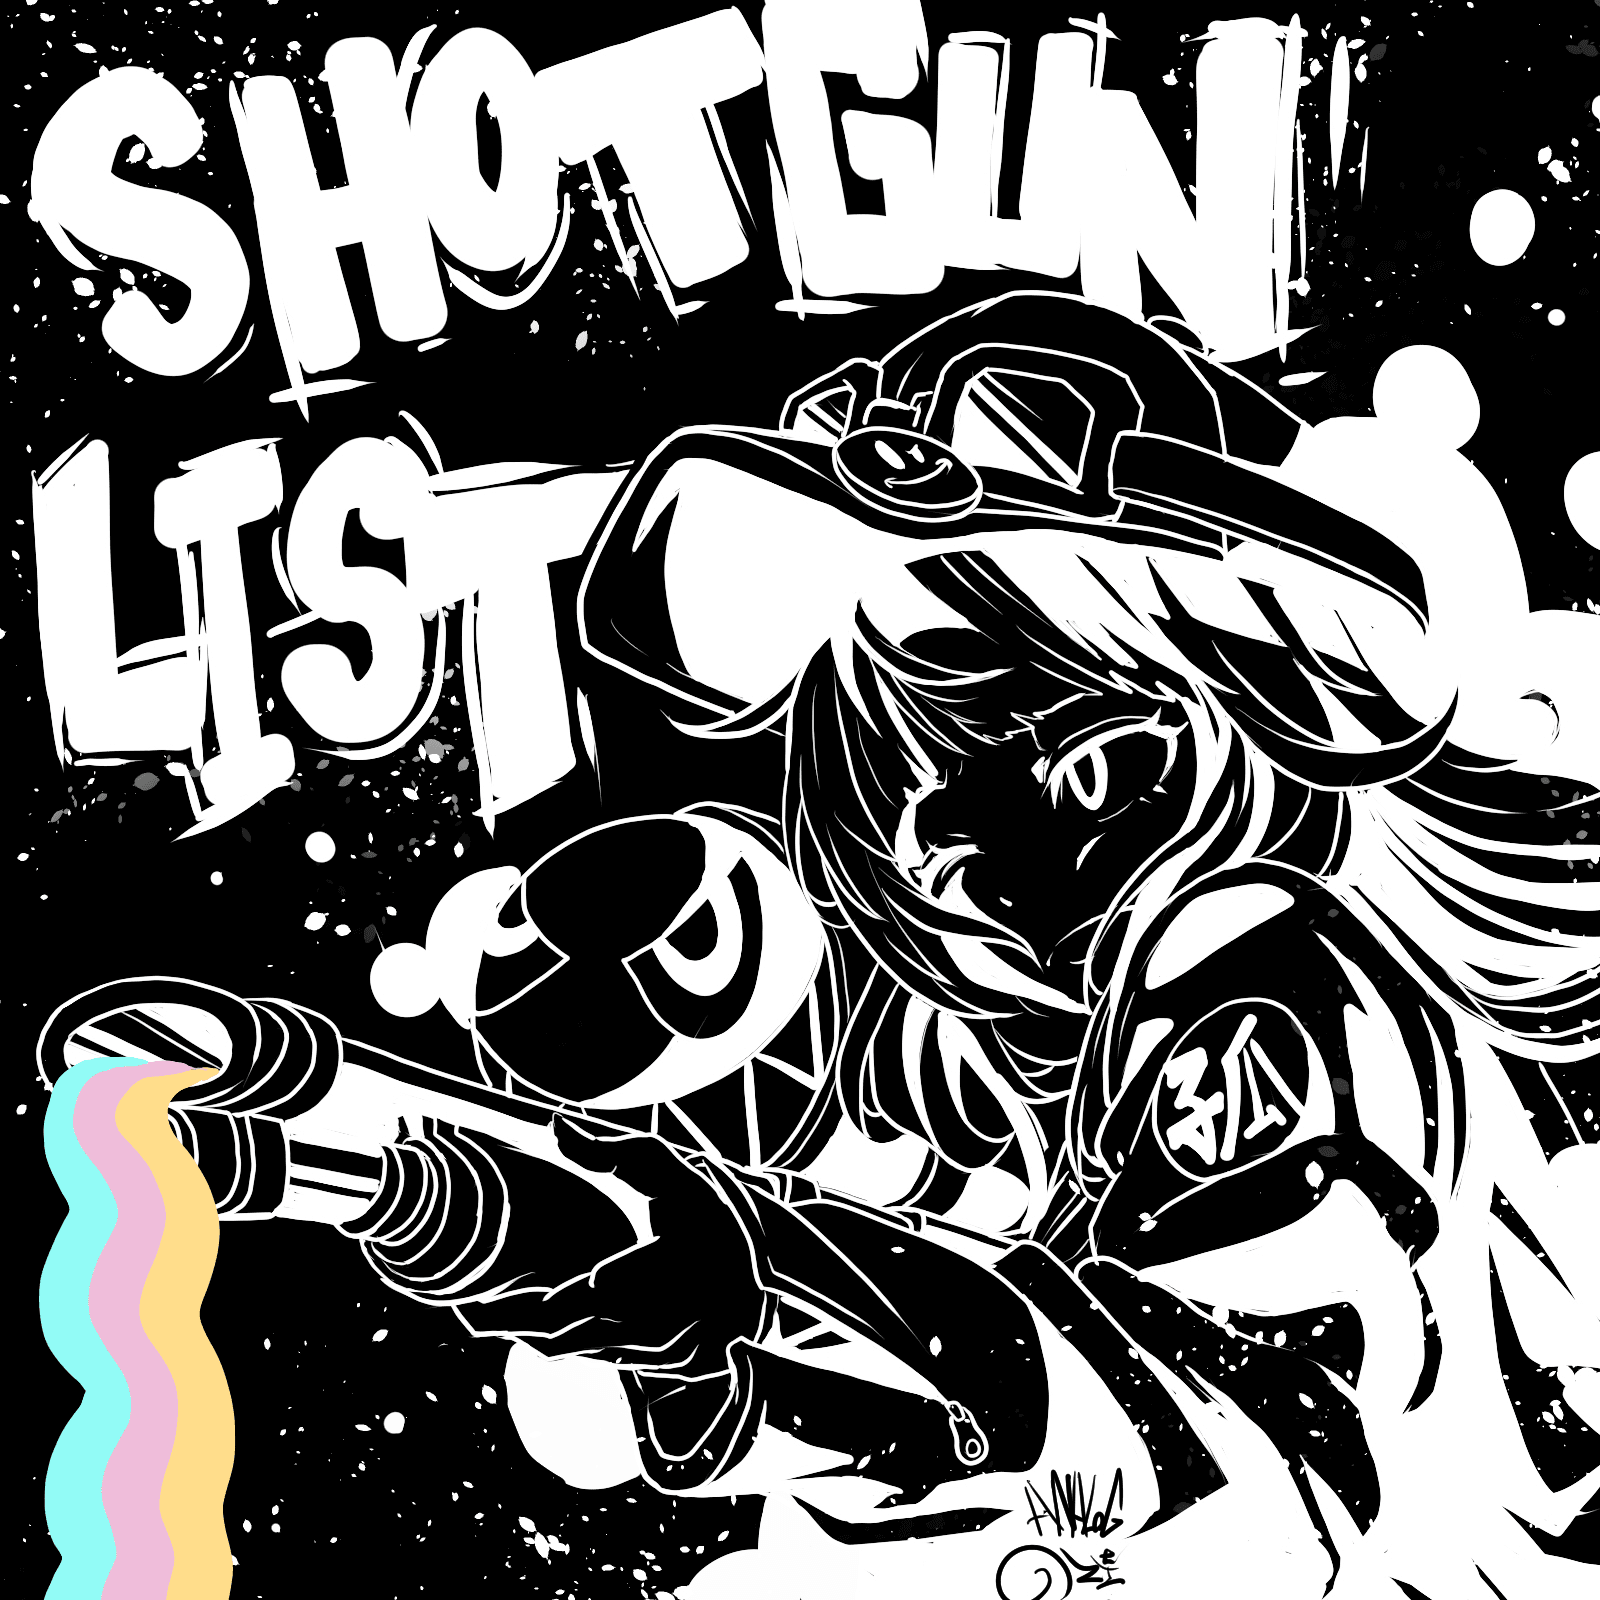 SHOTGUN LIST